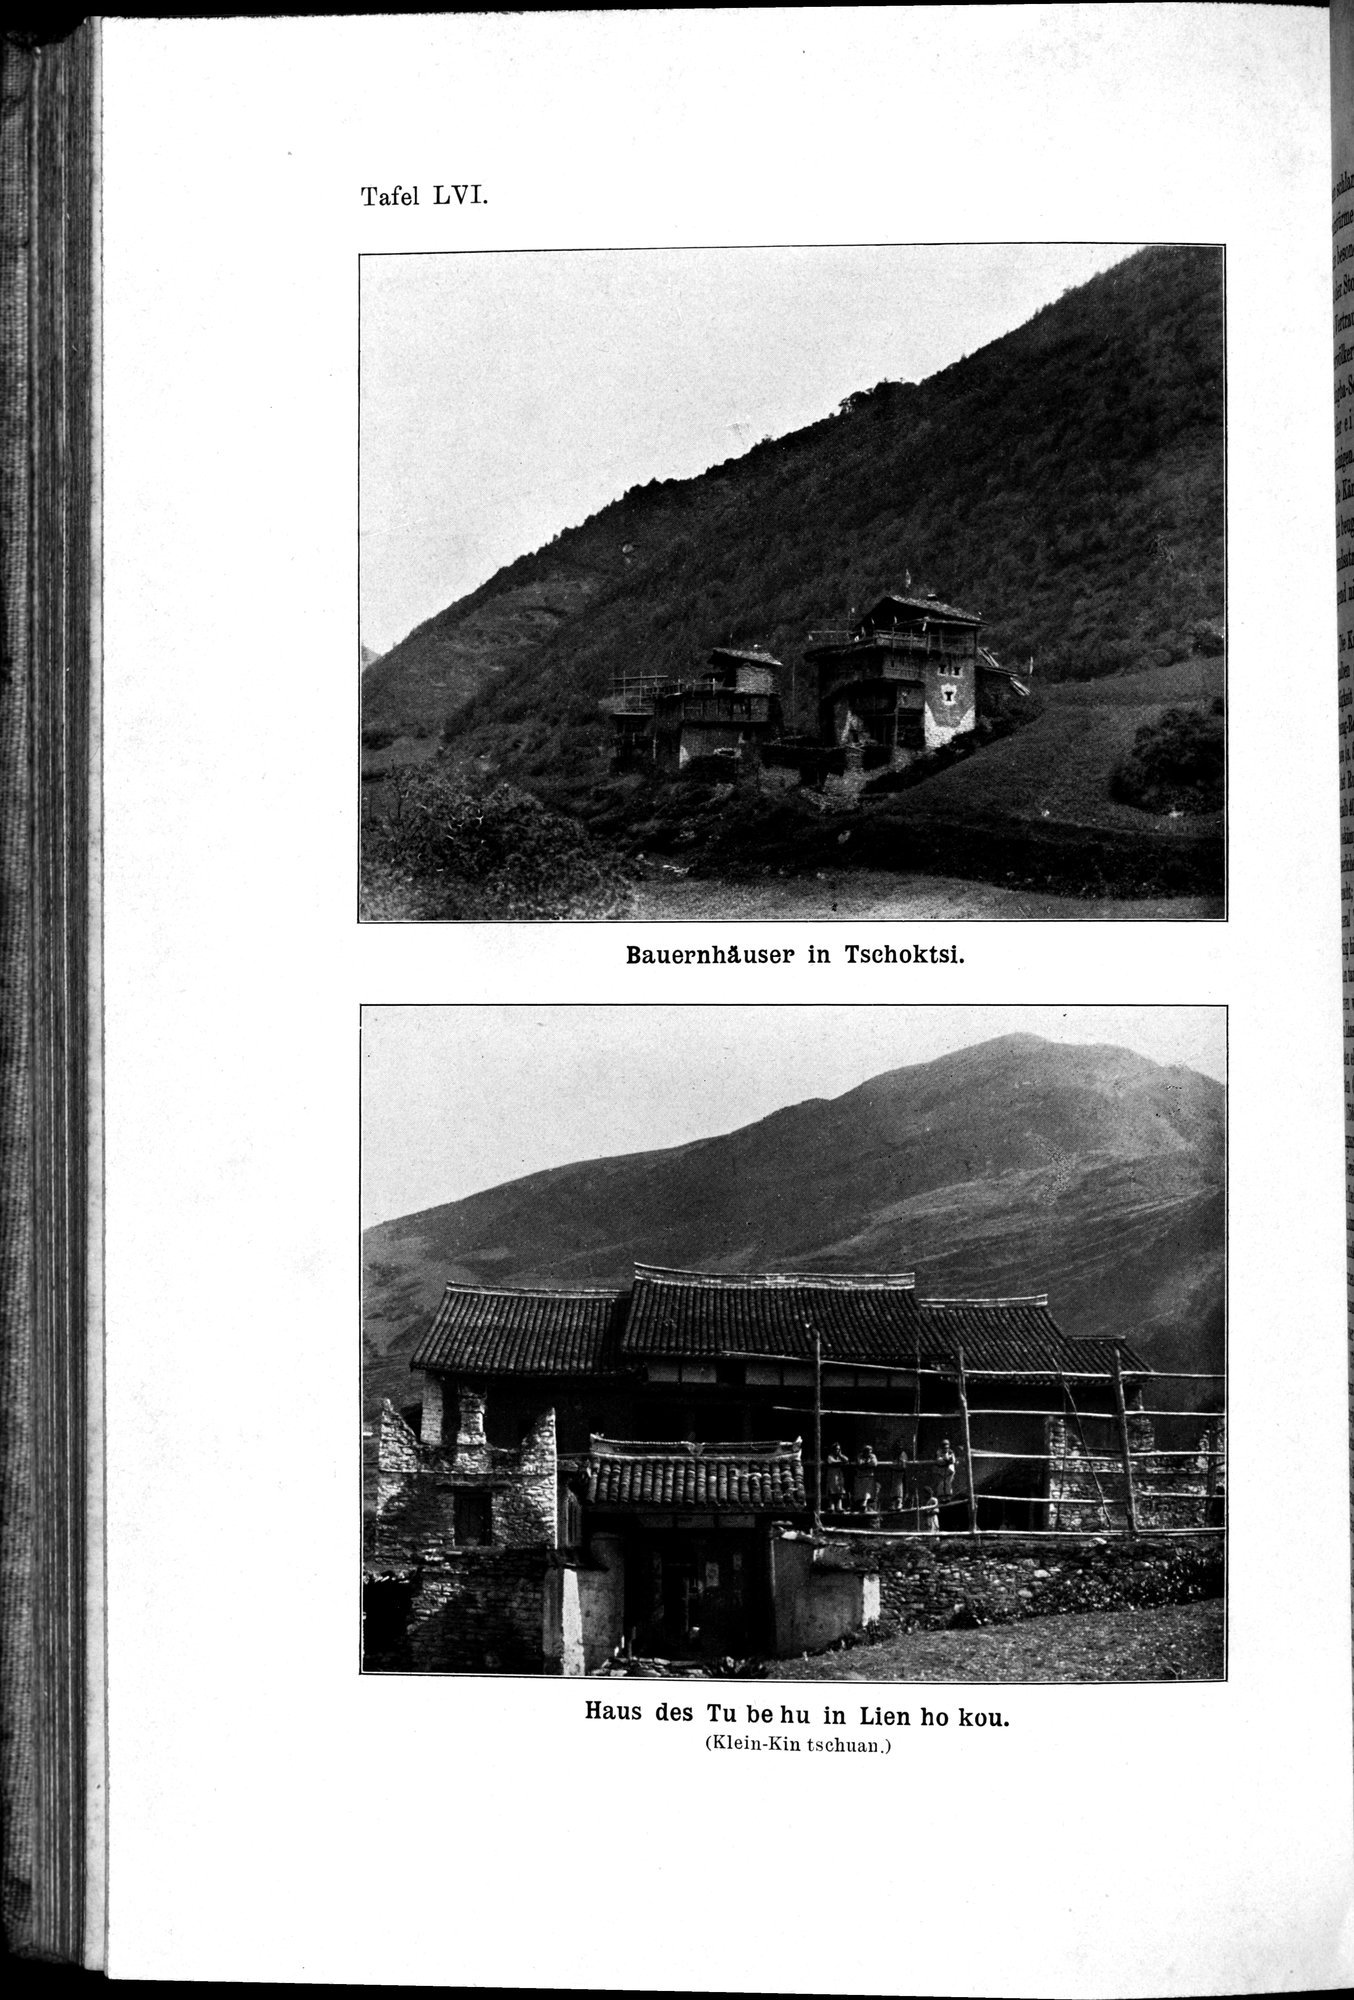 Meine Tibetreise : vol.2 / Page 290 (Grayscale High Resolution Image)